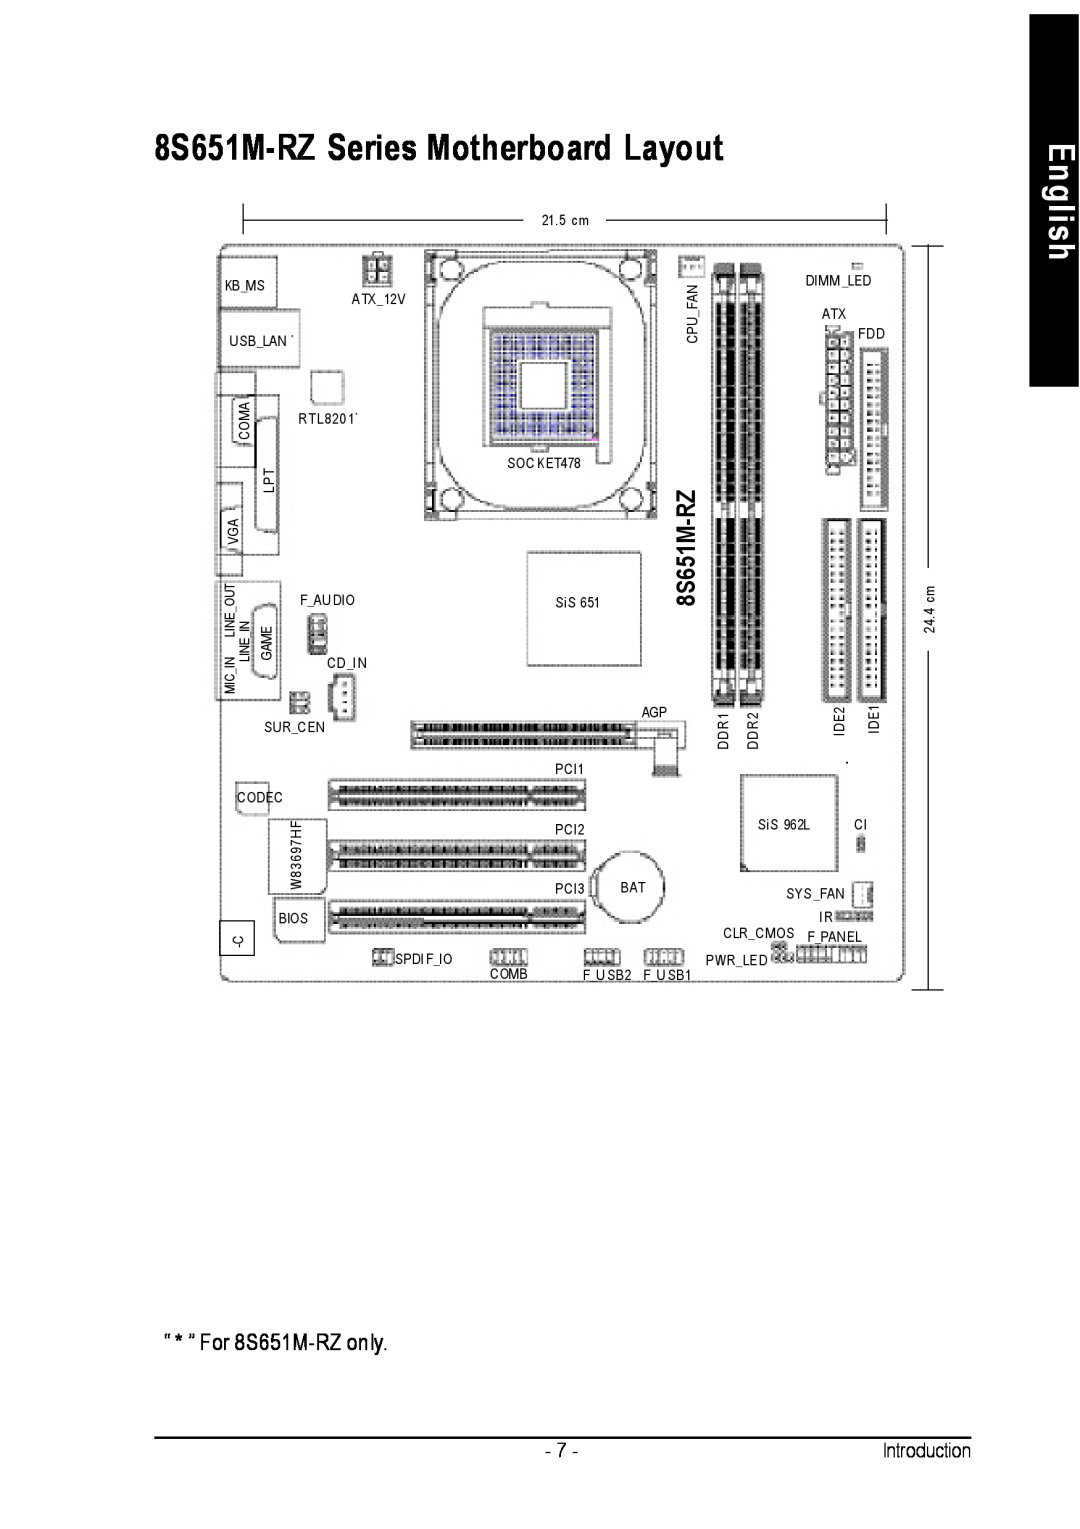 Intel 8S651M-RZ-C user manual 8S651M-RZ Series Motherboard Layout, English 